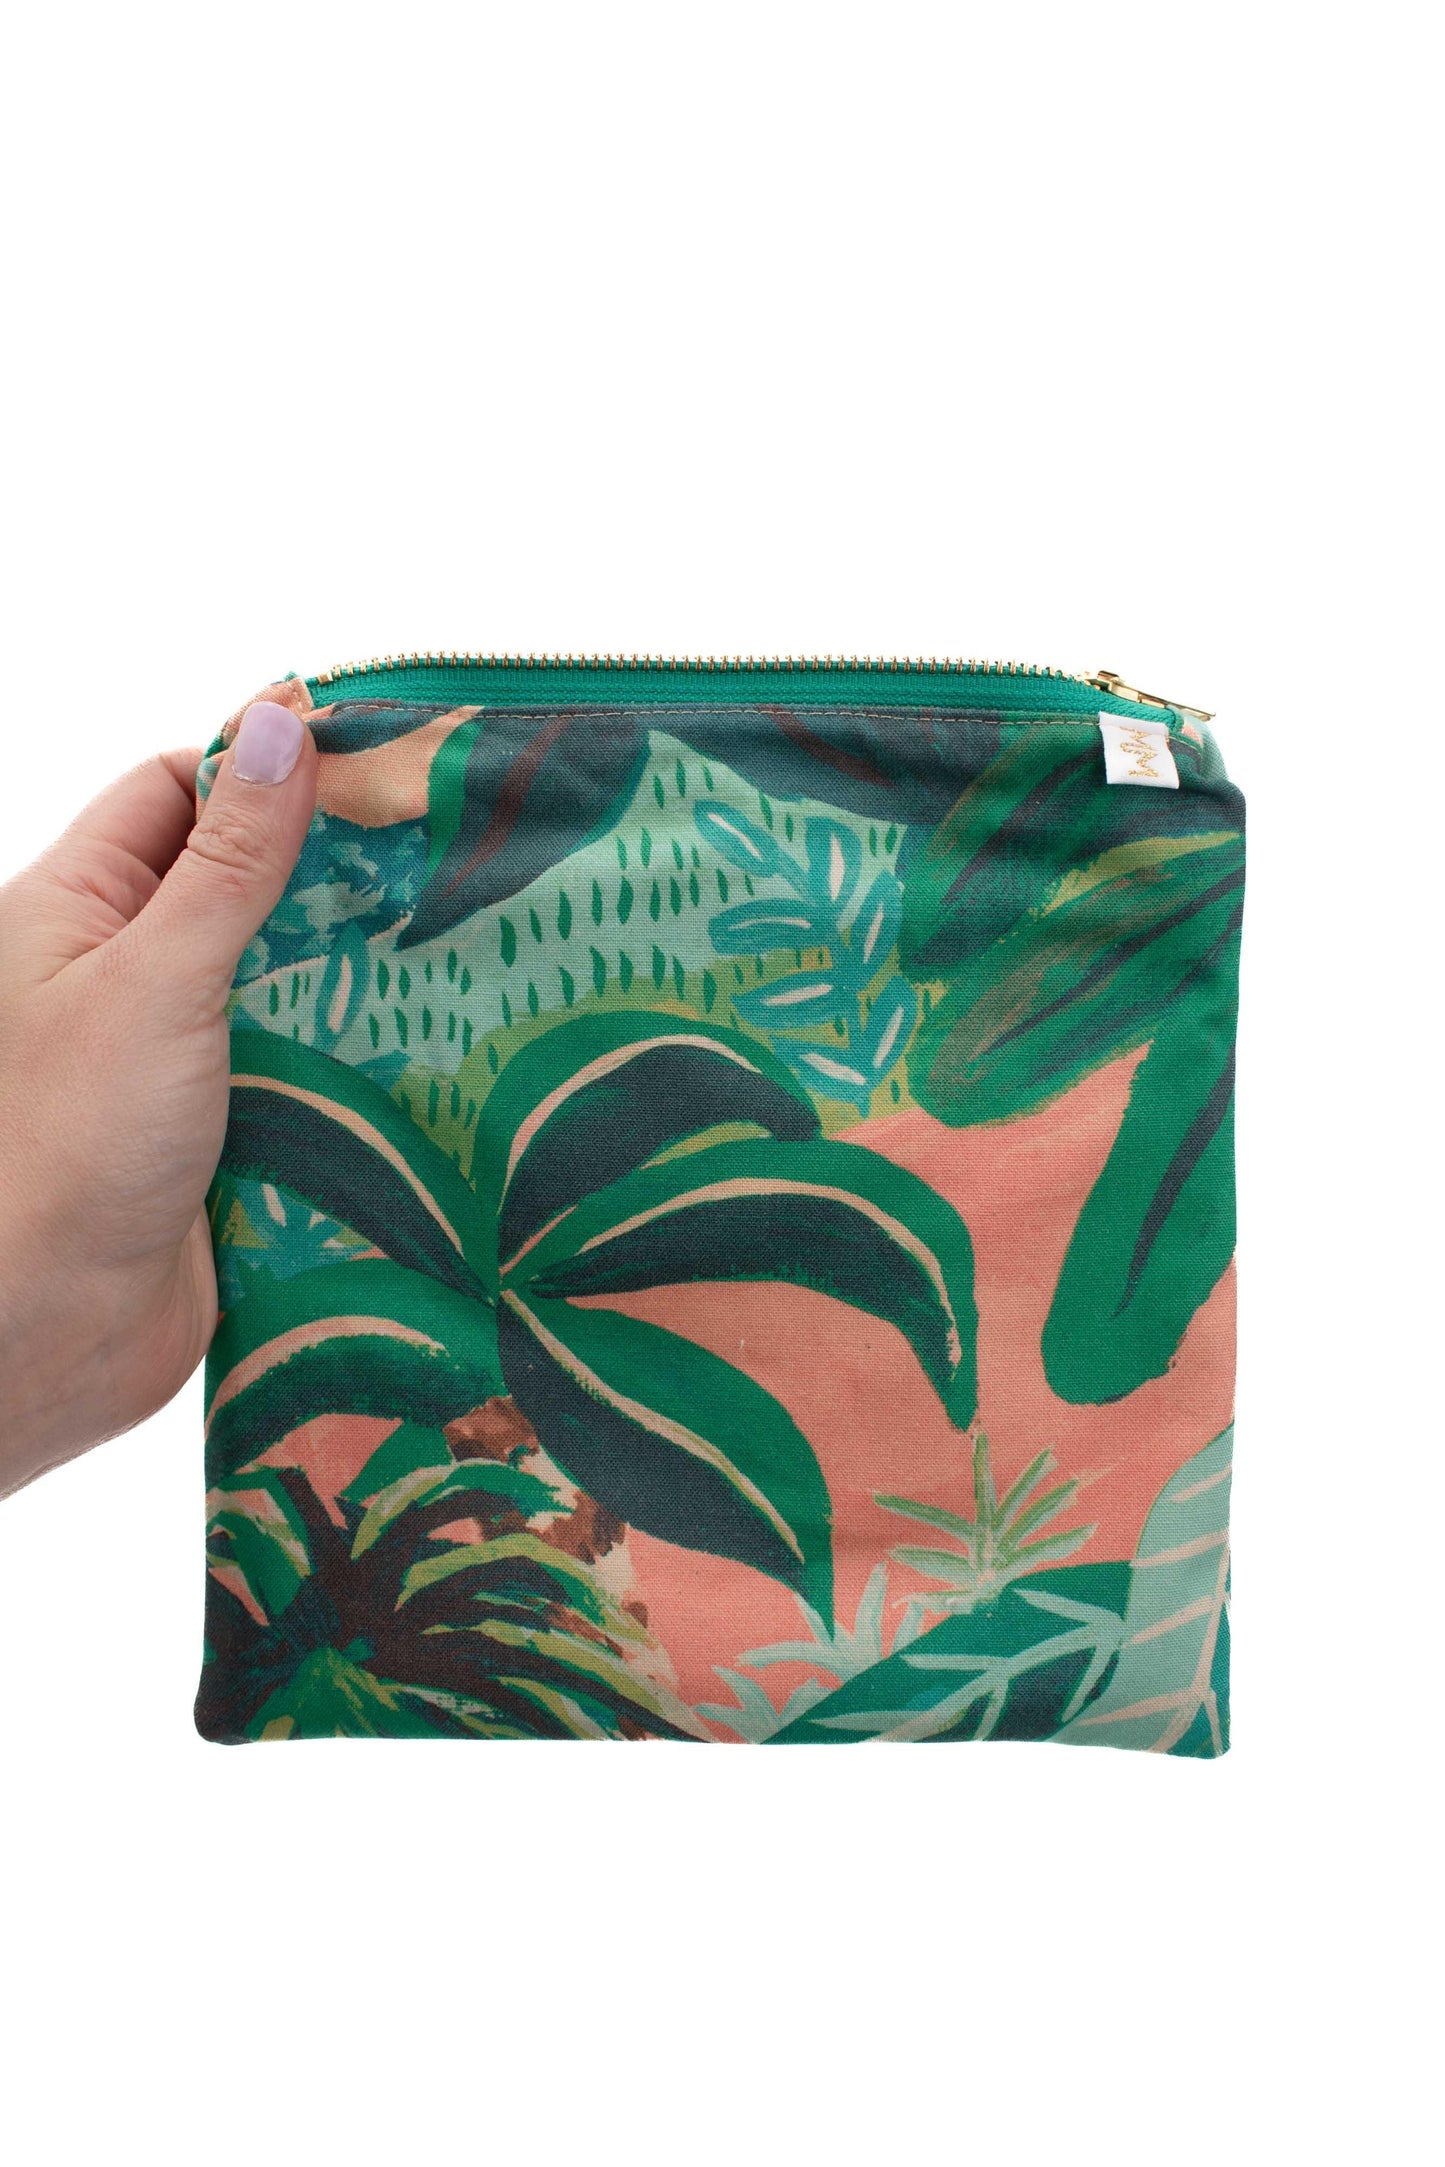 Belize Canvas Small Wet Bag - Modern Makerie